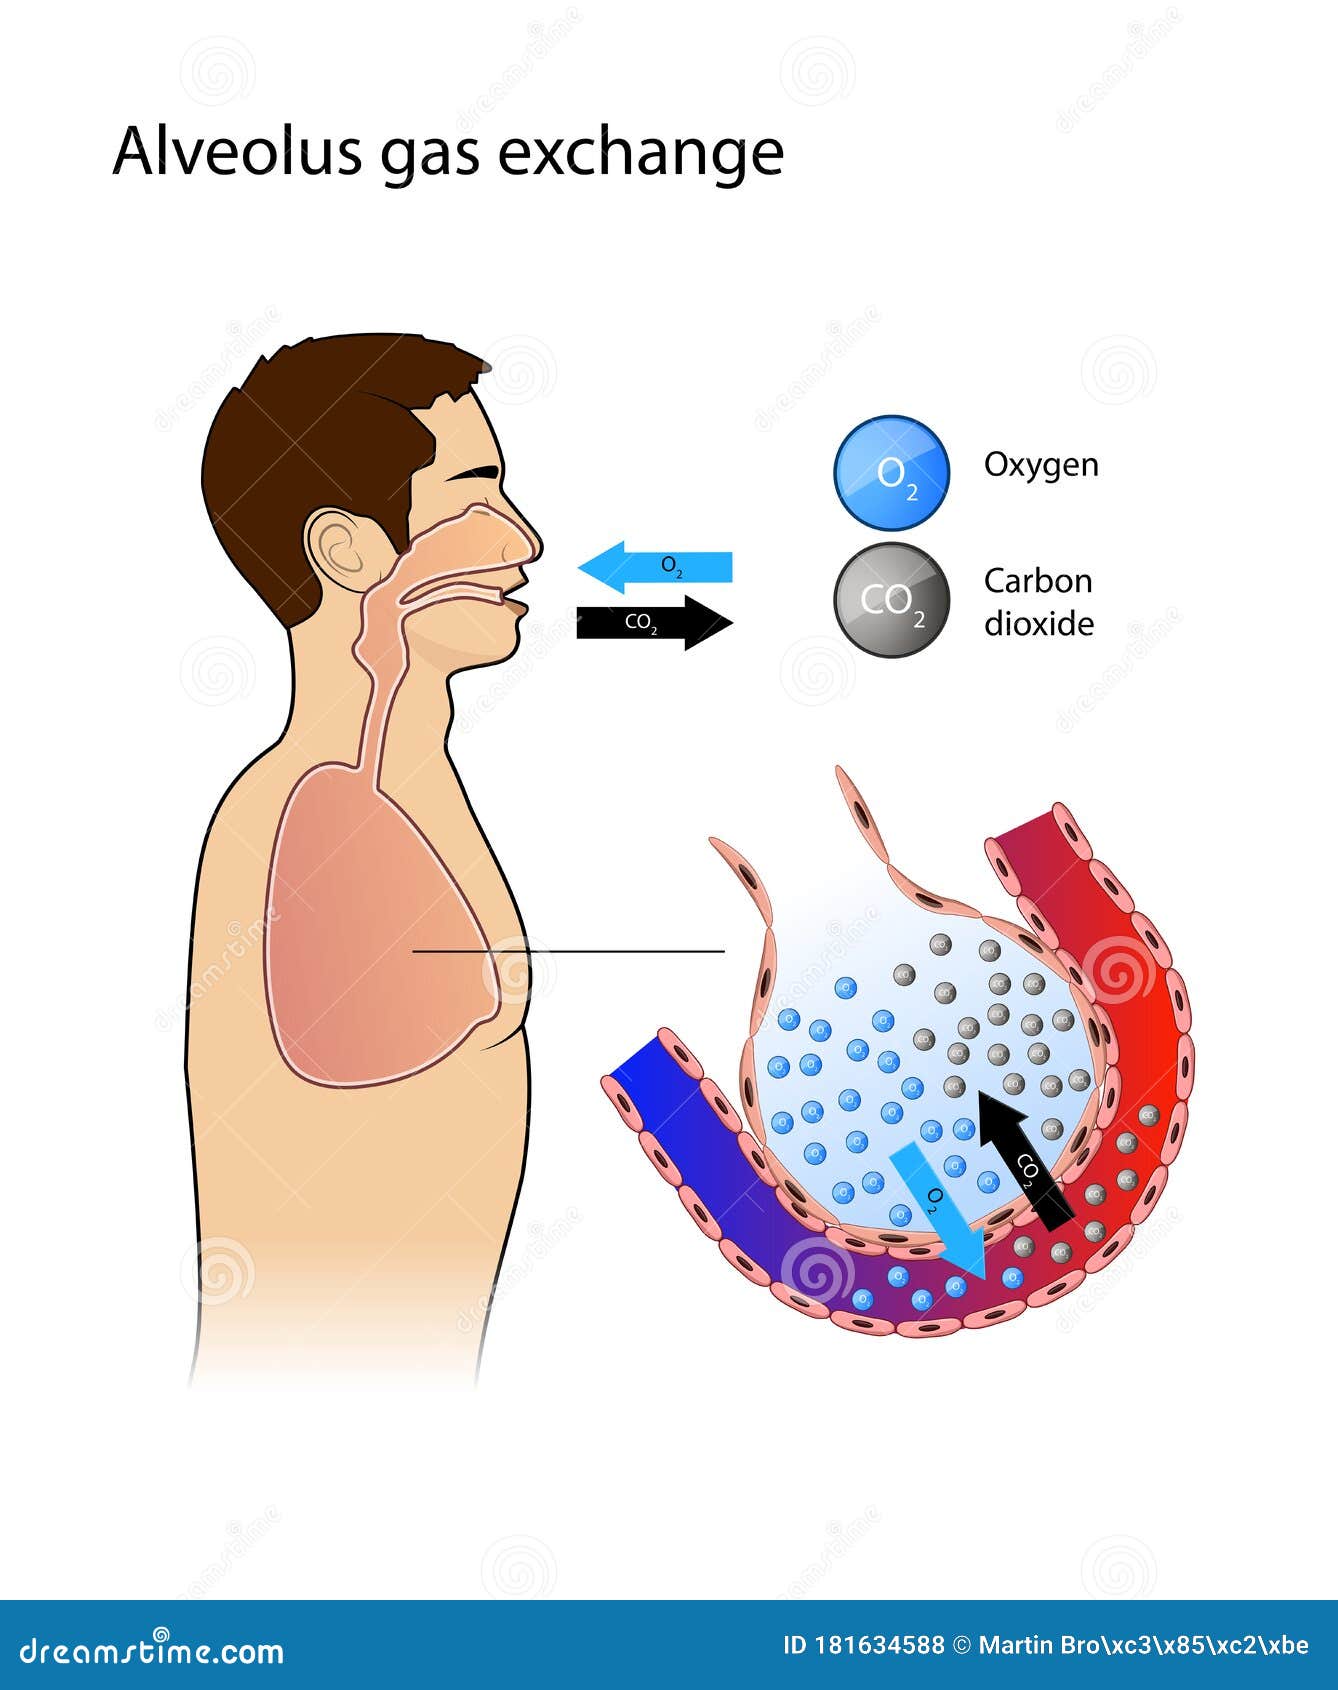 alveolus. gas exchange. pulmonary alveolus. alveoli and capillaries in the lungs, anatomy, oxygen and carbon dioxide exchange